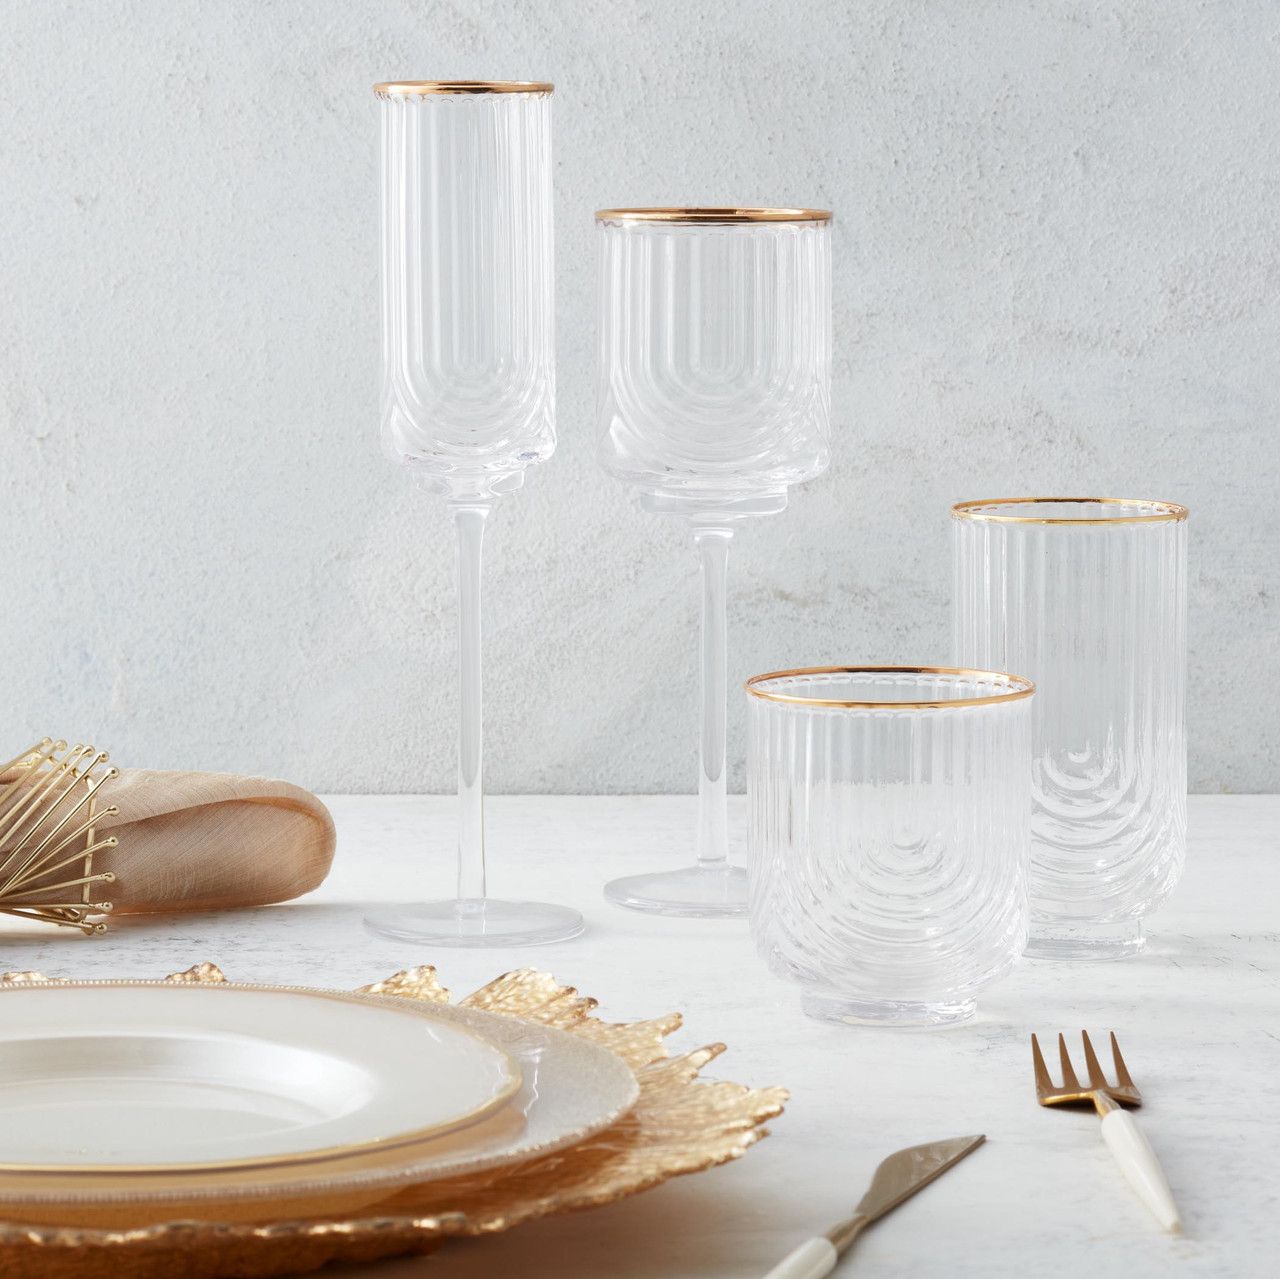 Regal Glassware Sets | Z Gallerie